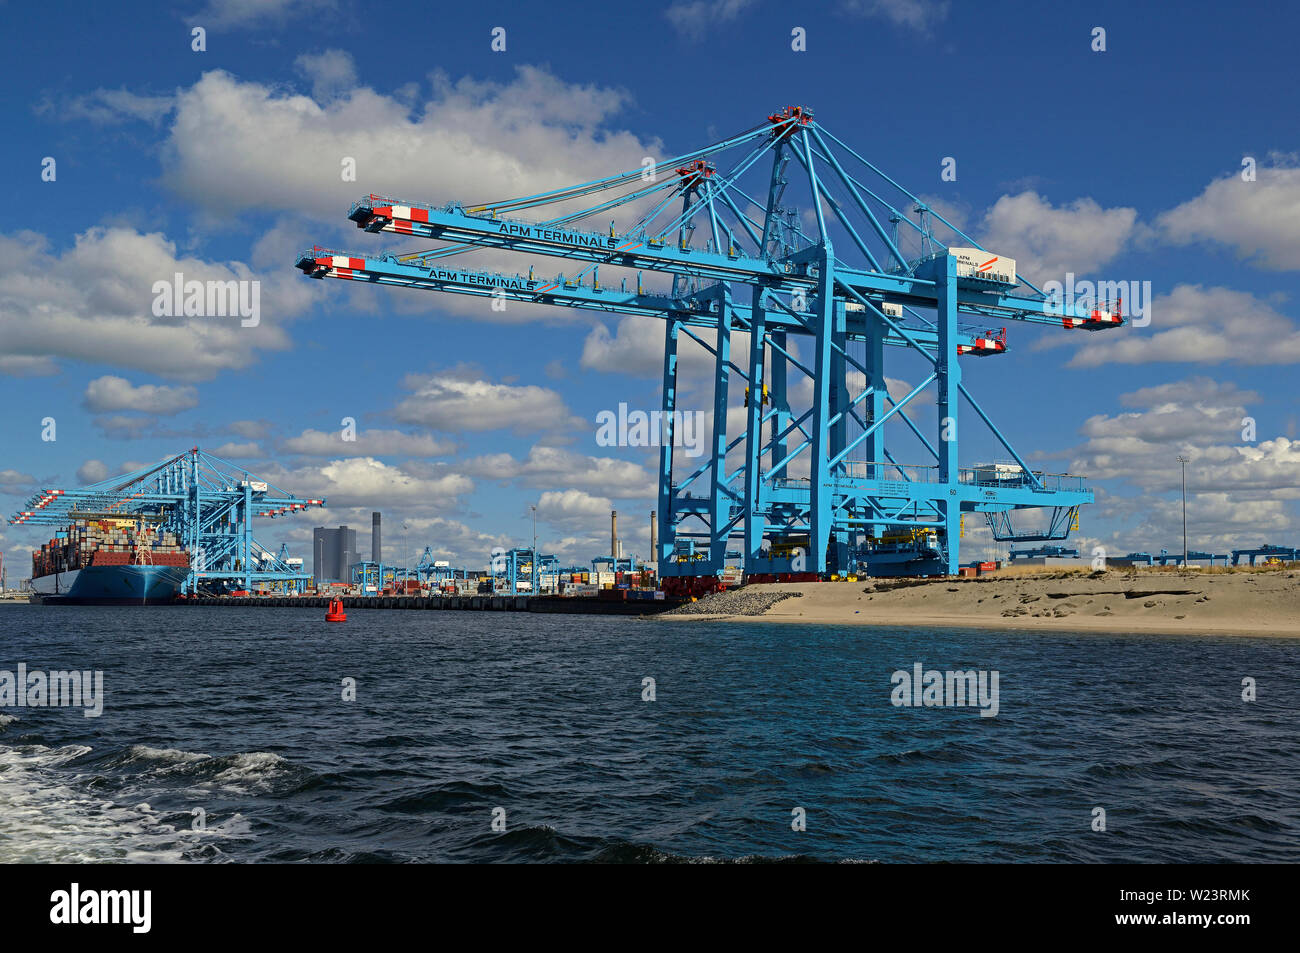 port of rotterdam, zuid holland/netherlands - september 07, 2018:  triple e class containership mumbai maersk (imo  9780471) loading/unloading cargo a Stock Photo